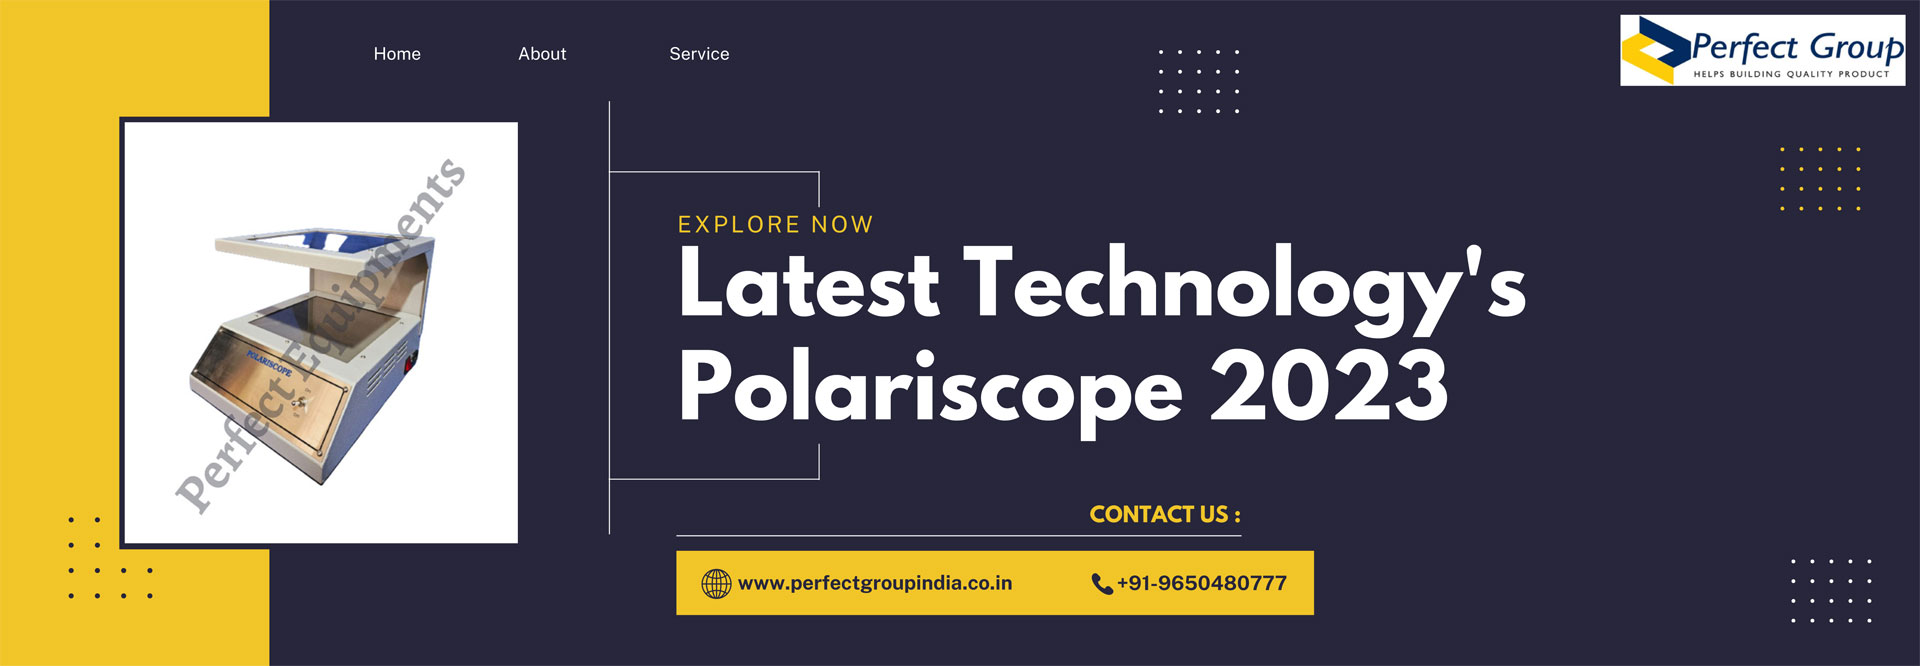 Latest Technology's Polariscope 2023